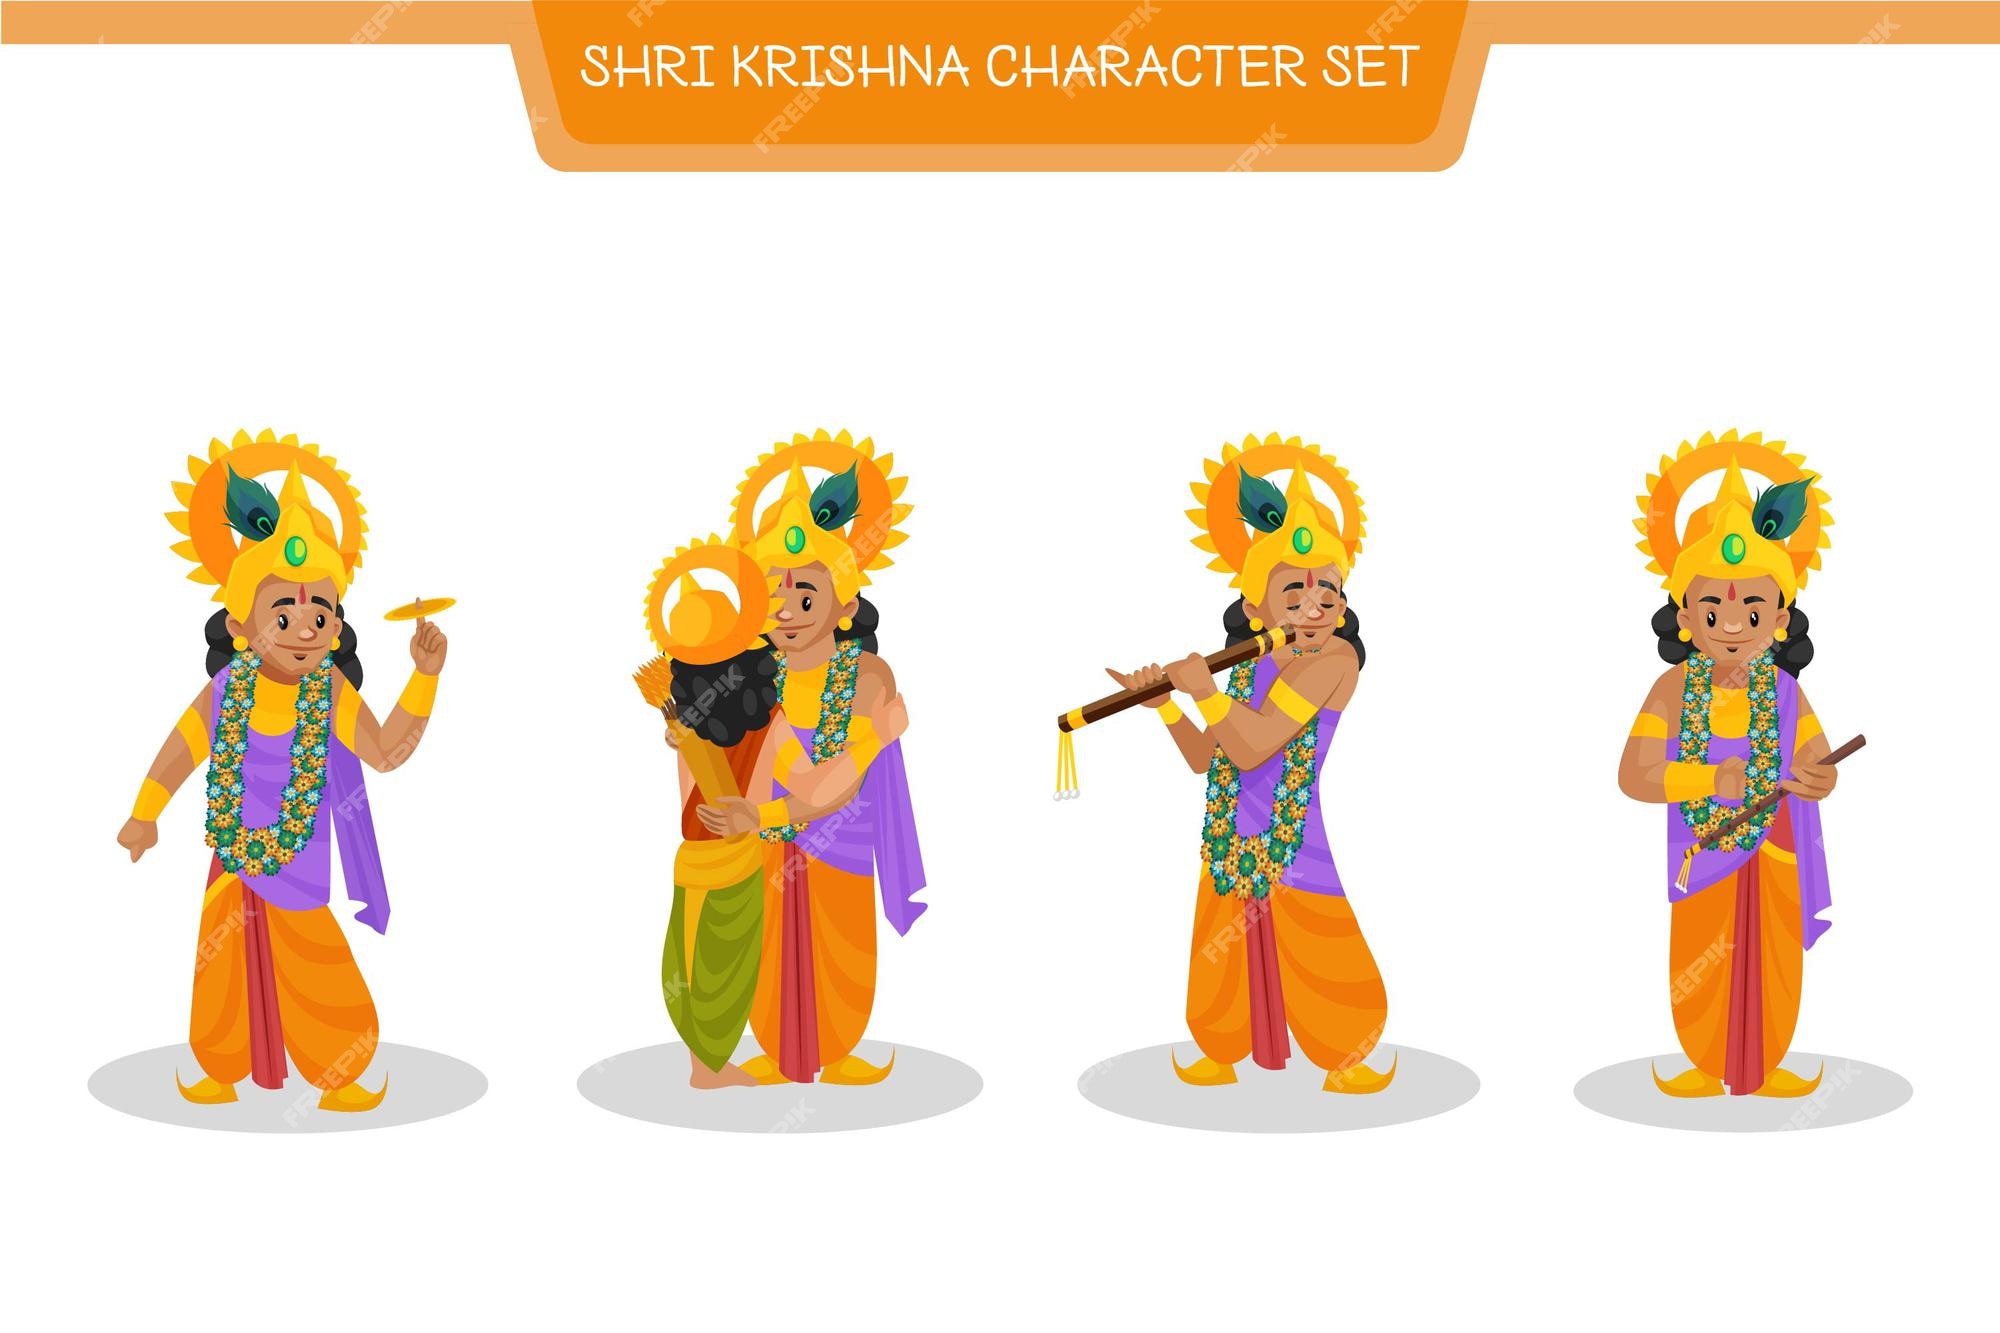 Premium Vector | Cartoon illustration of shri krishna character set